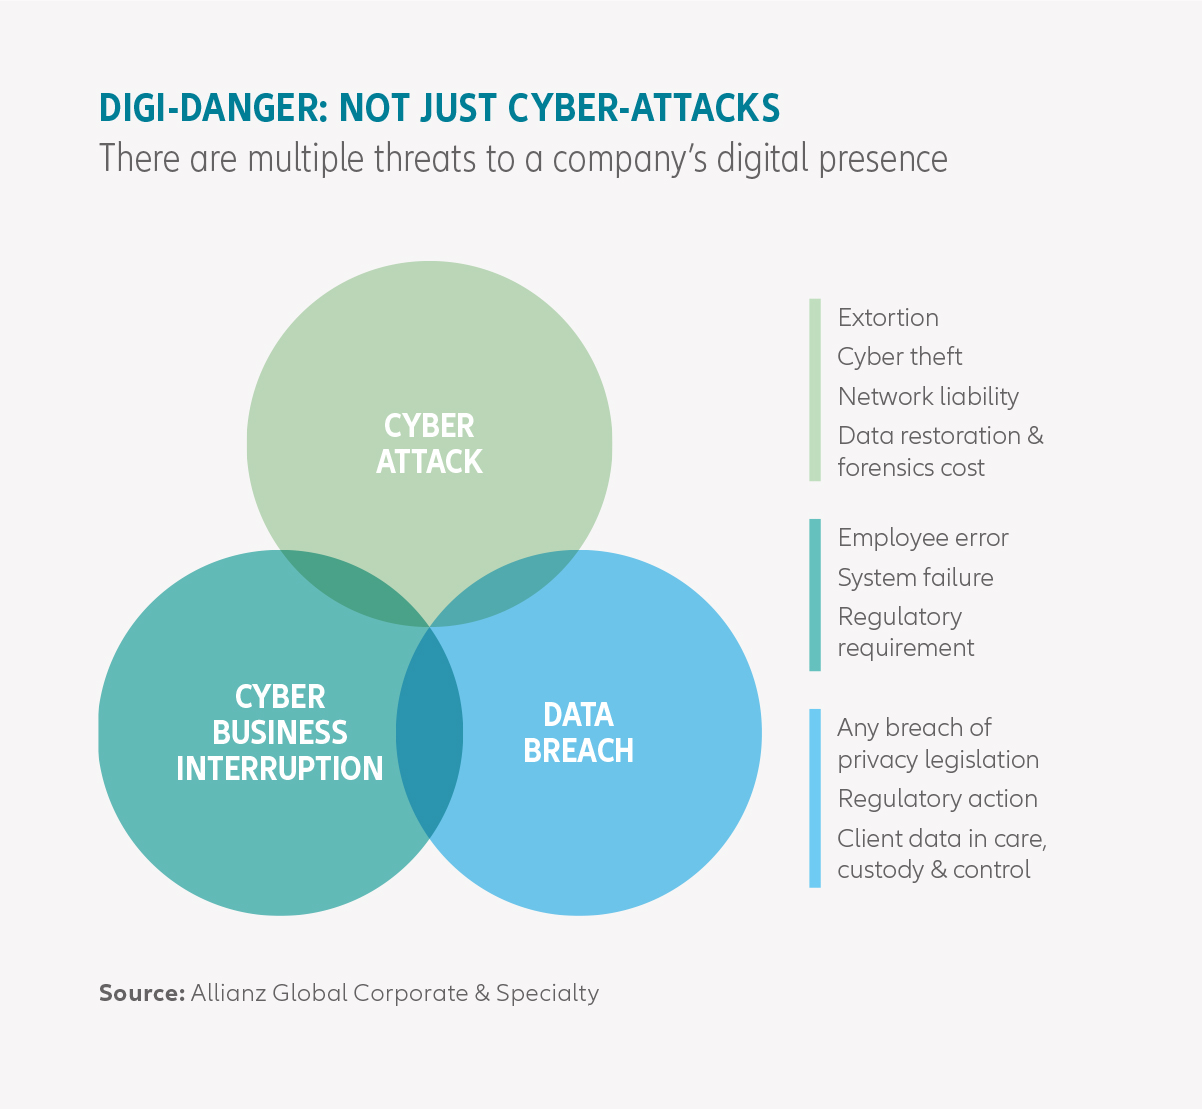 Digital dangers: cyber attack, cyber business interruption, data breach